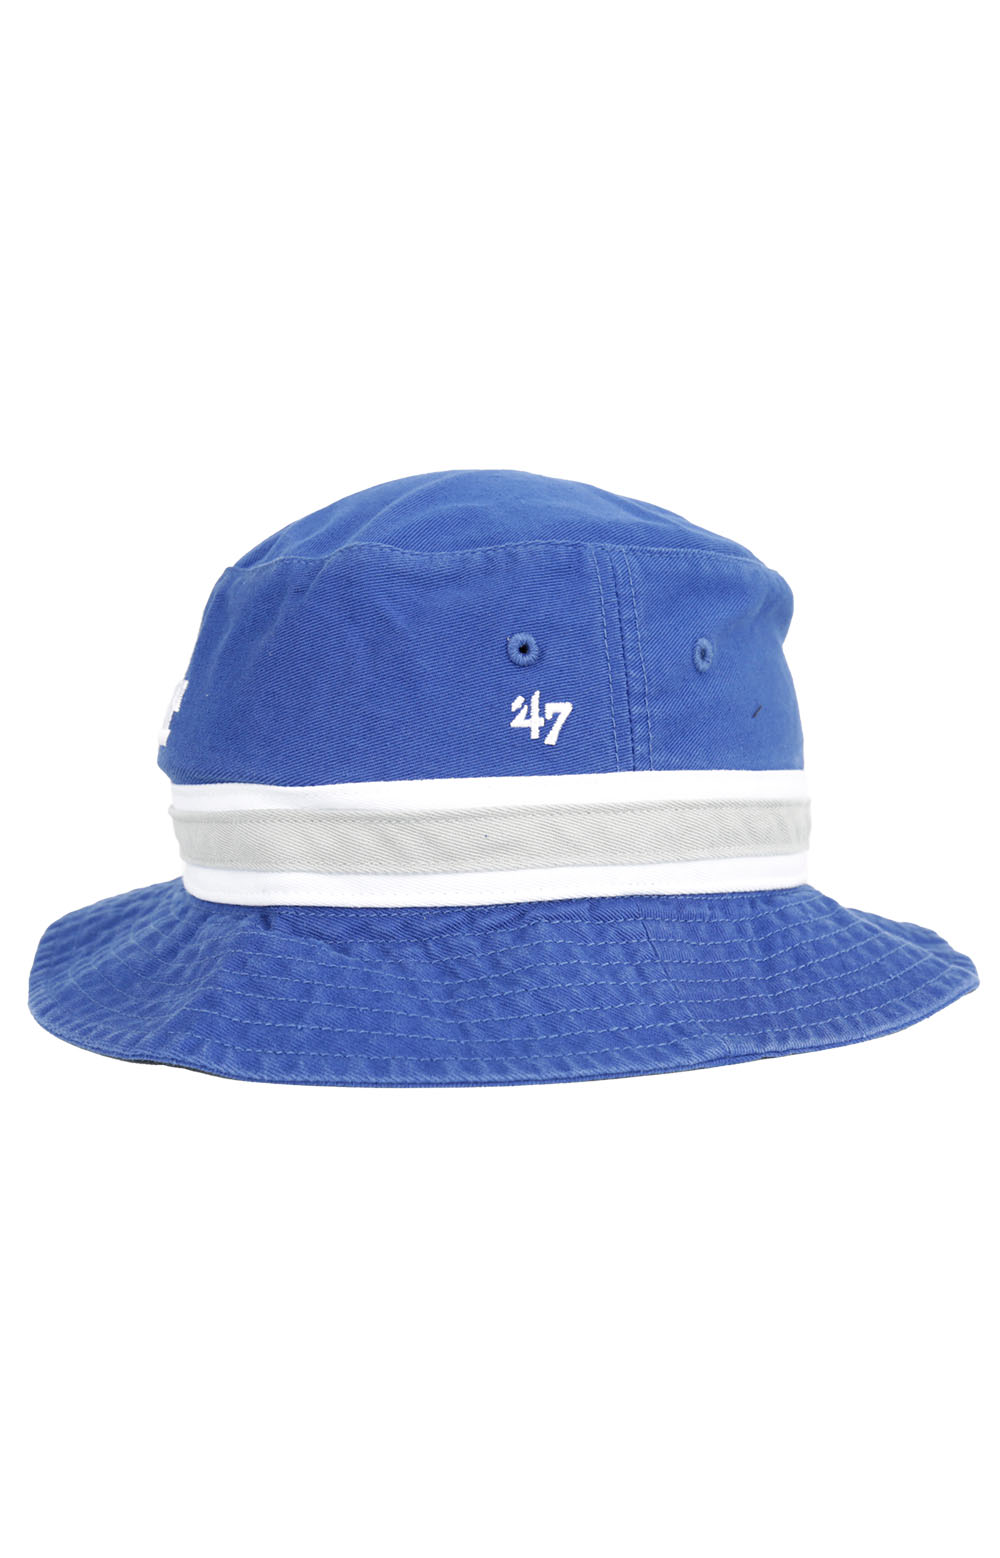 LA Dodgers Striped Bucket Hat - Royal Blue